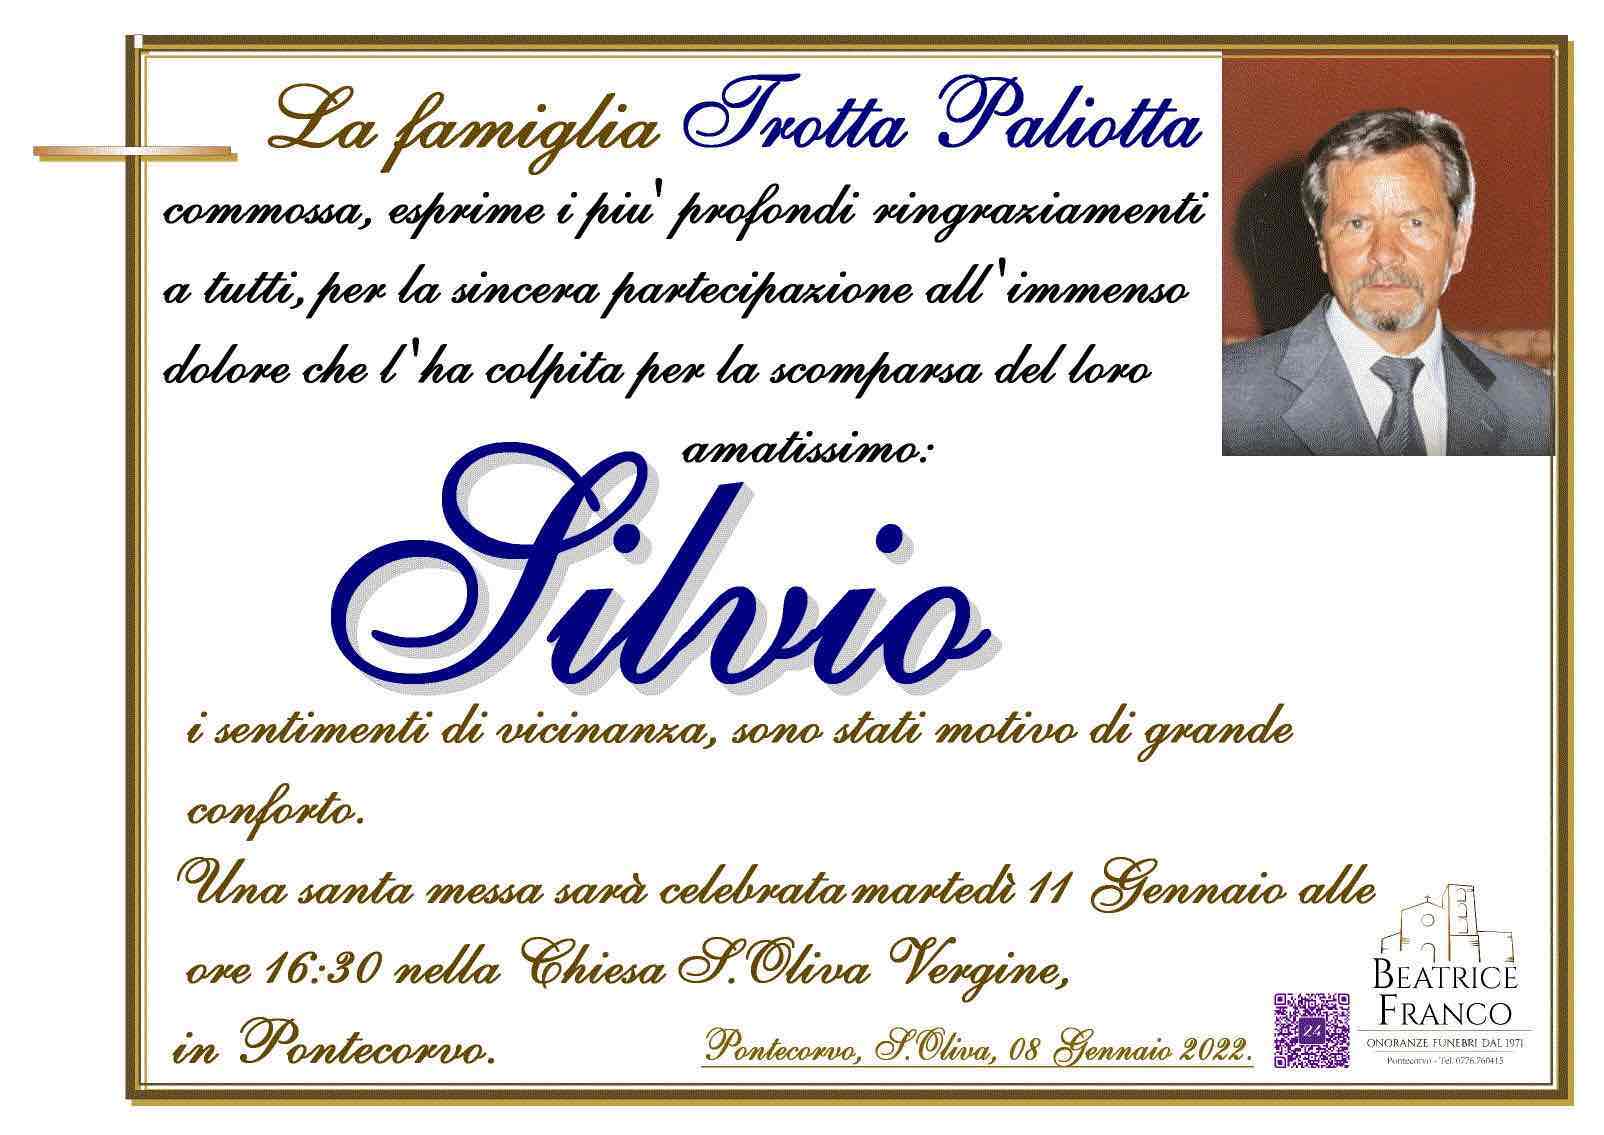 Silvio Trotta